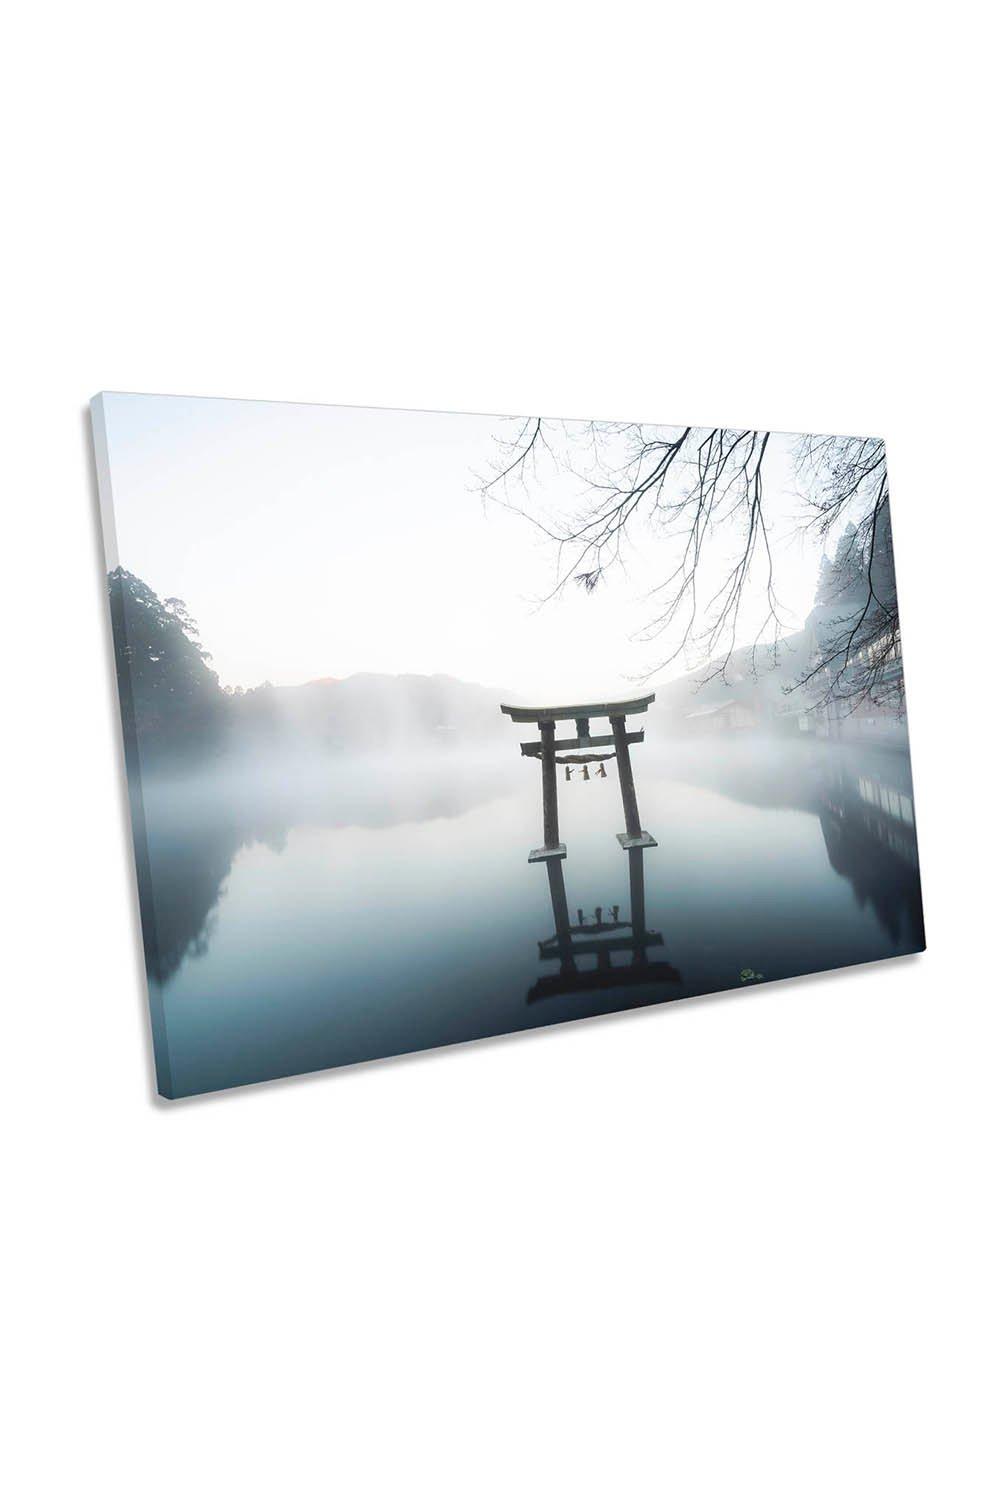 Misty Morning in Japan Zen Gate Canvas Wall Art Picture Print